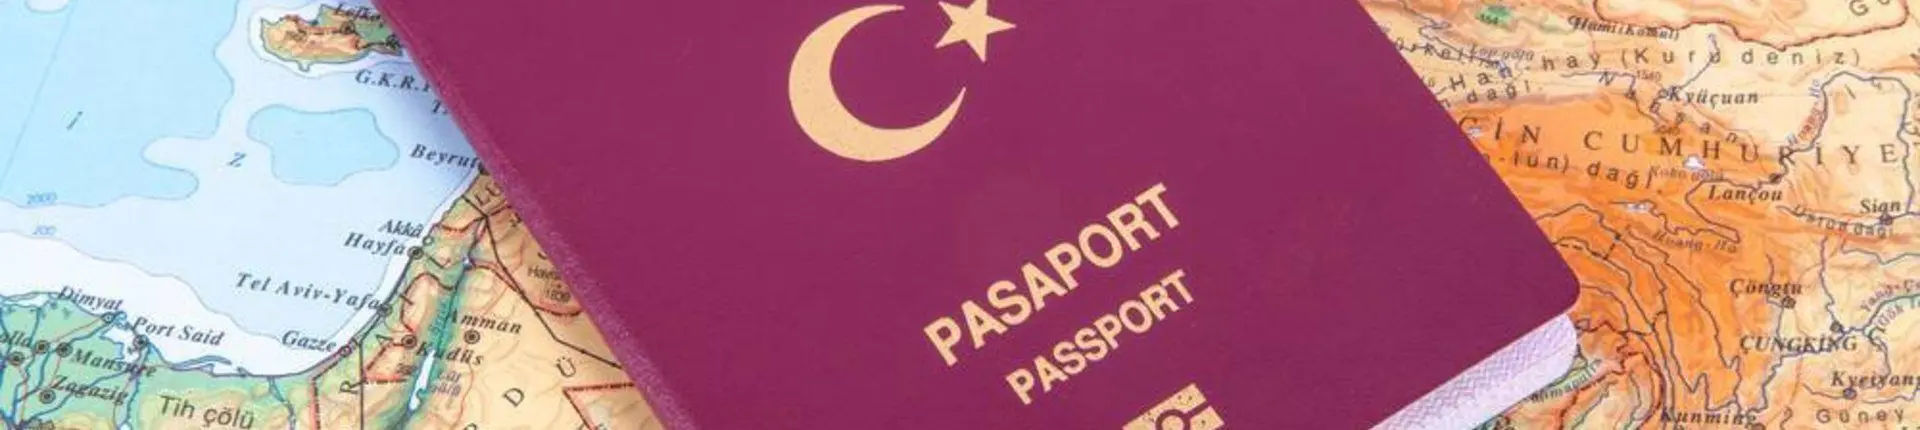 https://cdn2.enuygun.com/media/lib/1920x430/uploads/image/turkiye-cumhuriyeti-pasaportu-25008.webp